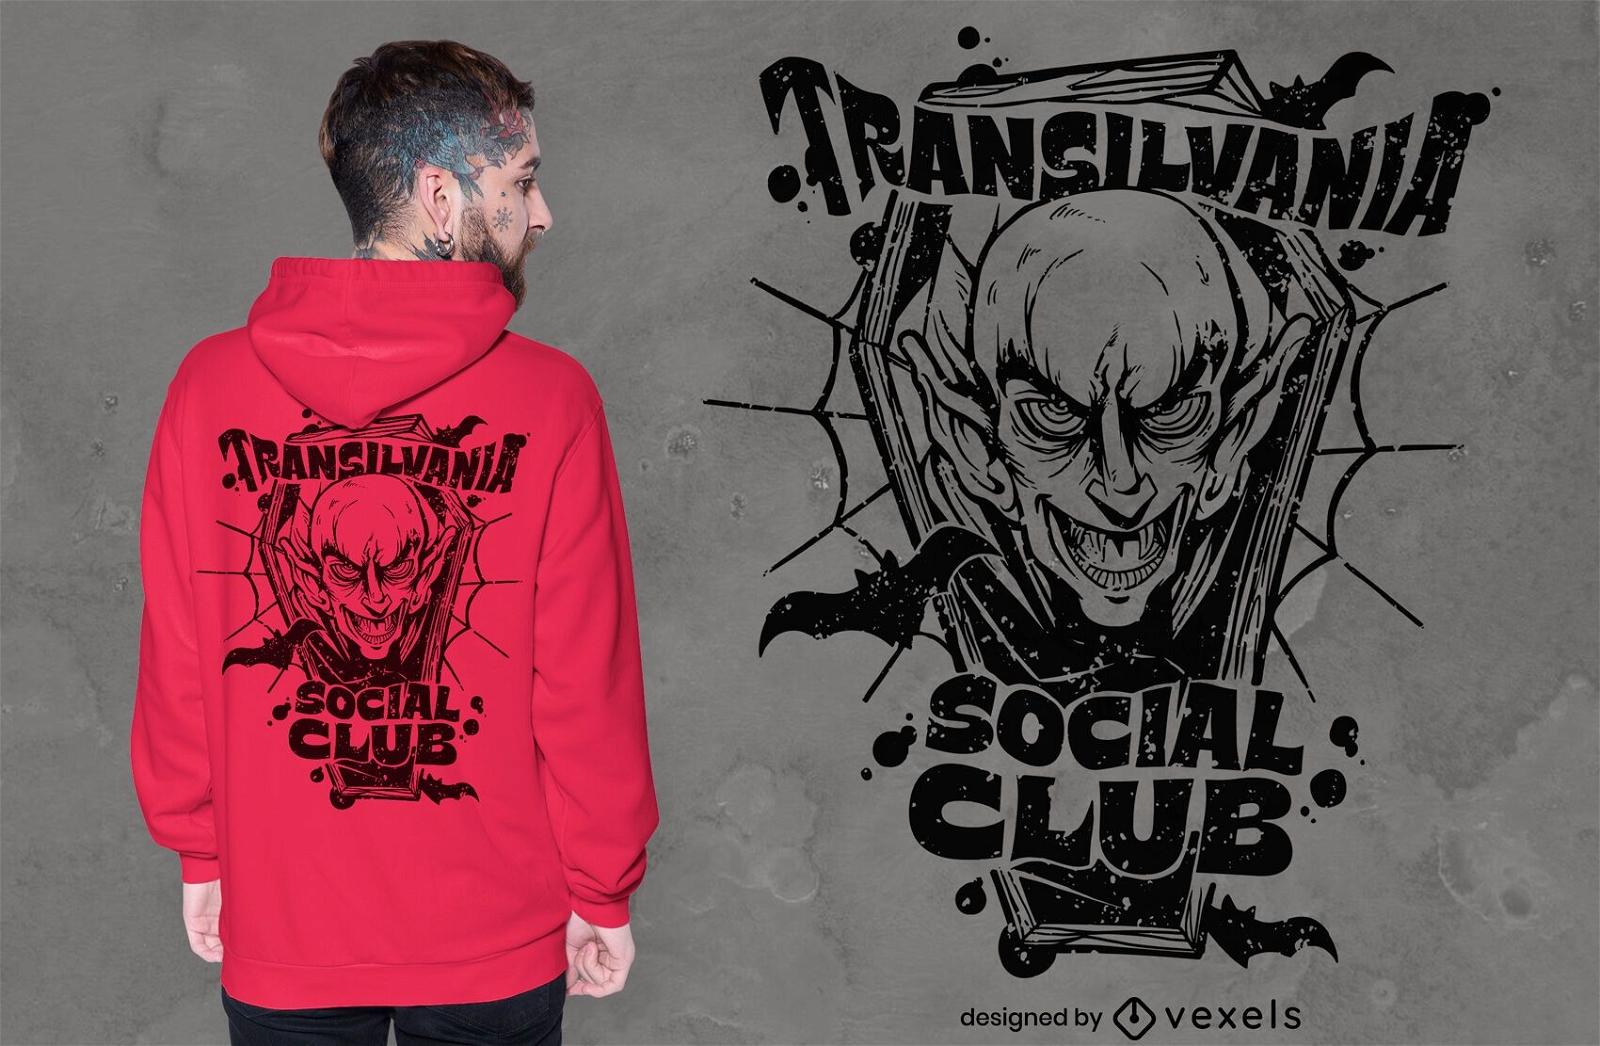 Diseño de camiseta del club social de Transilvania.